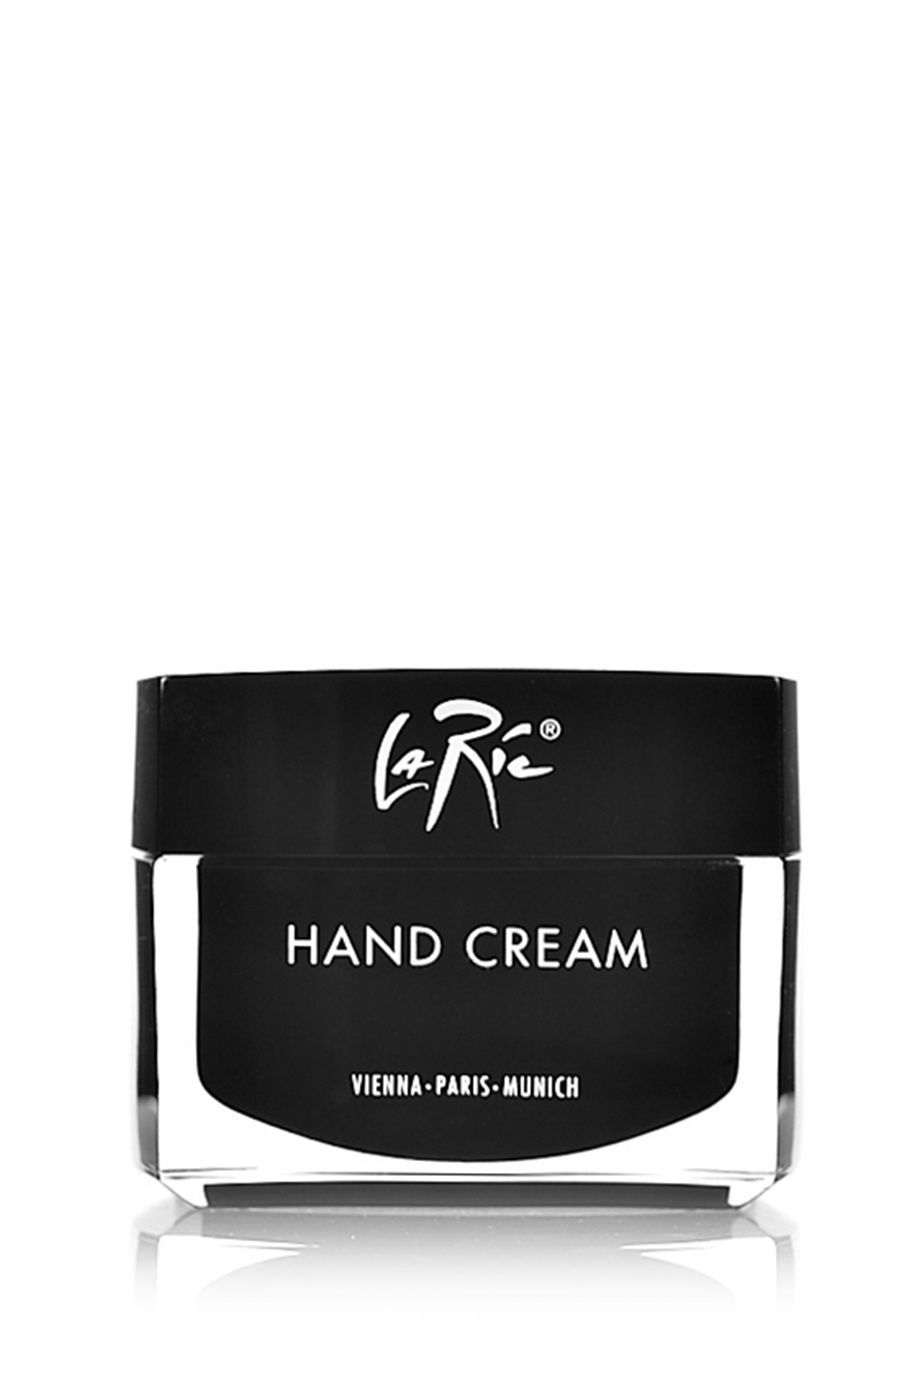 La Ric Hand Cream 50 ml.